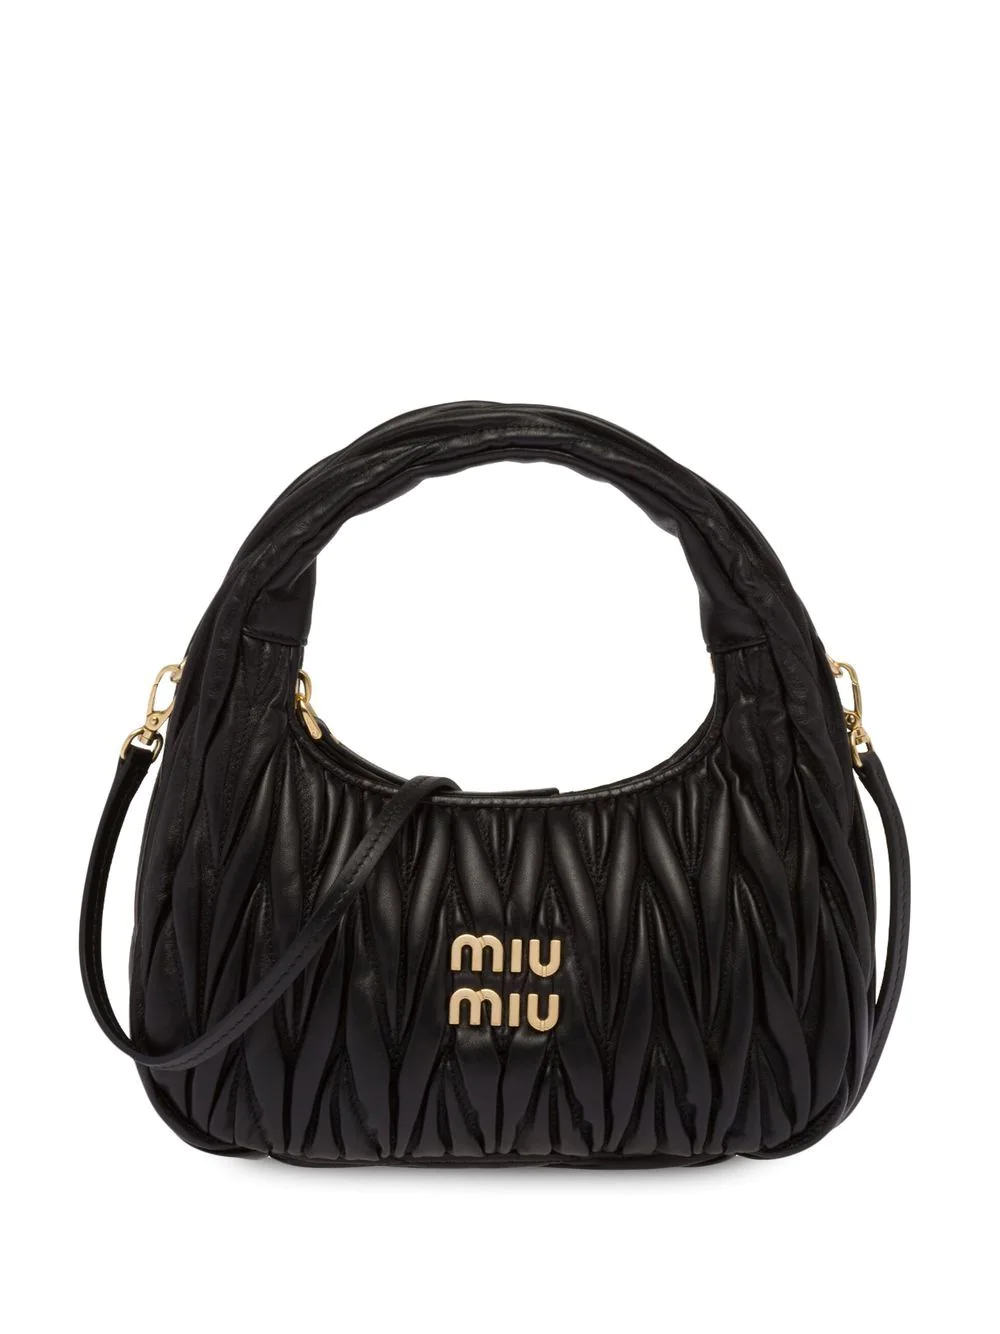 Miu Miu Women's Mini Hobo Bag